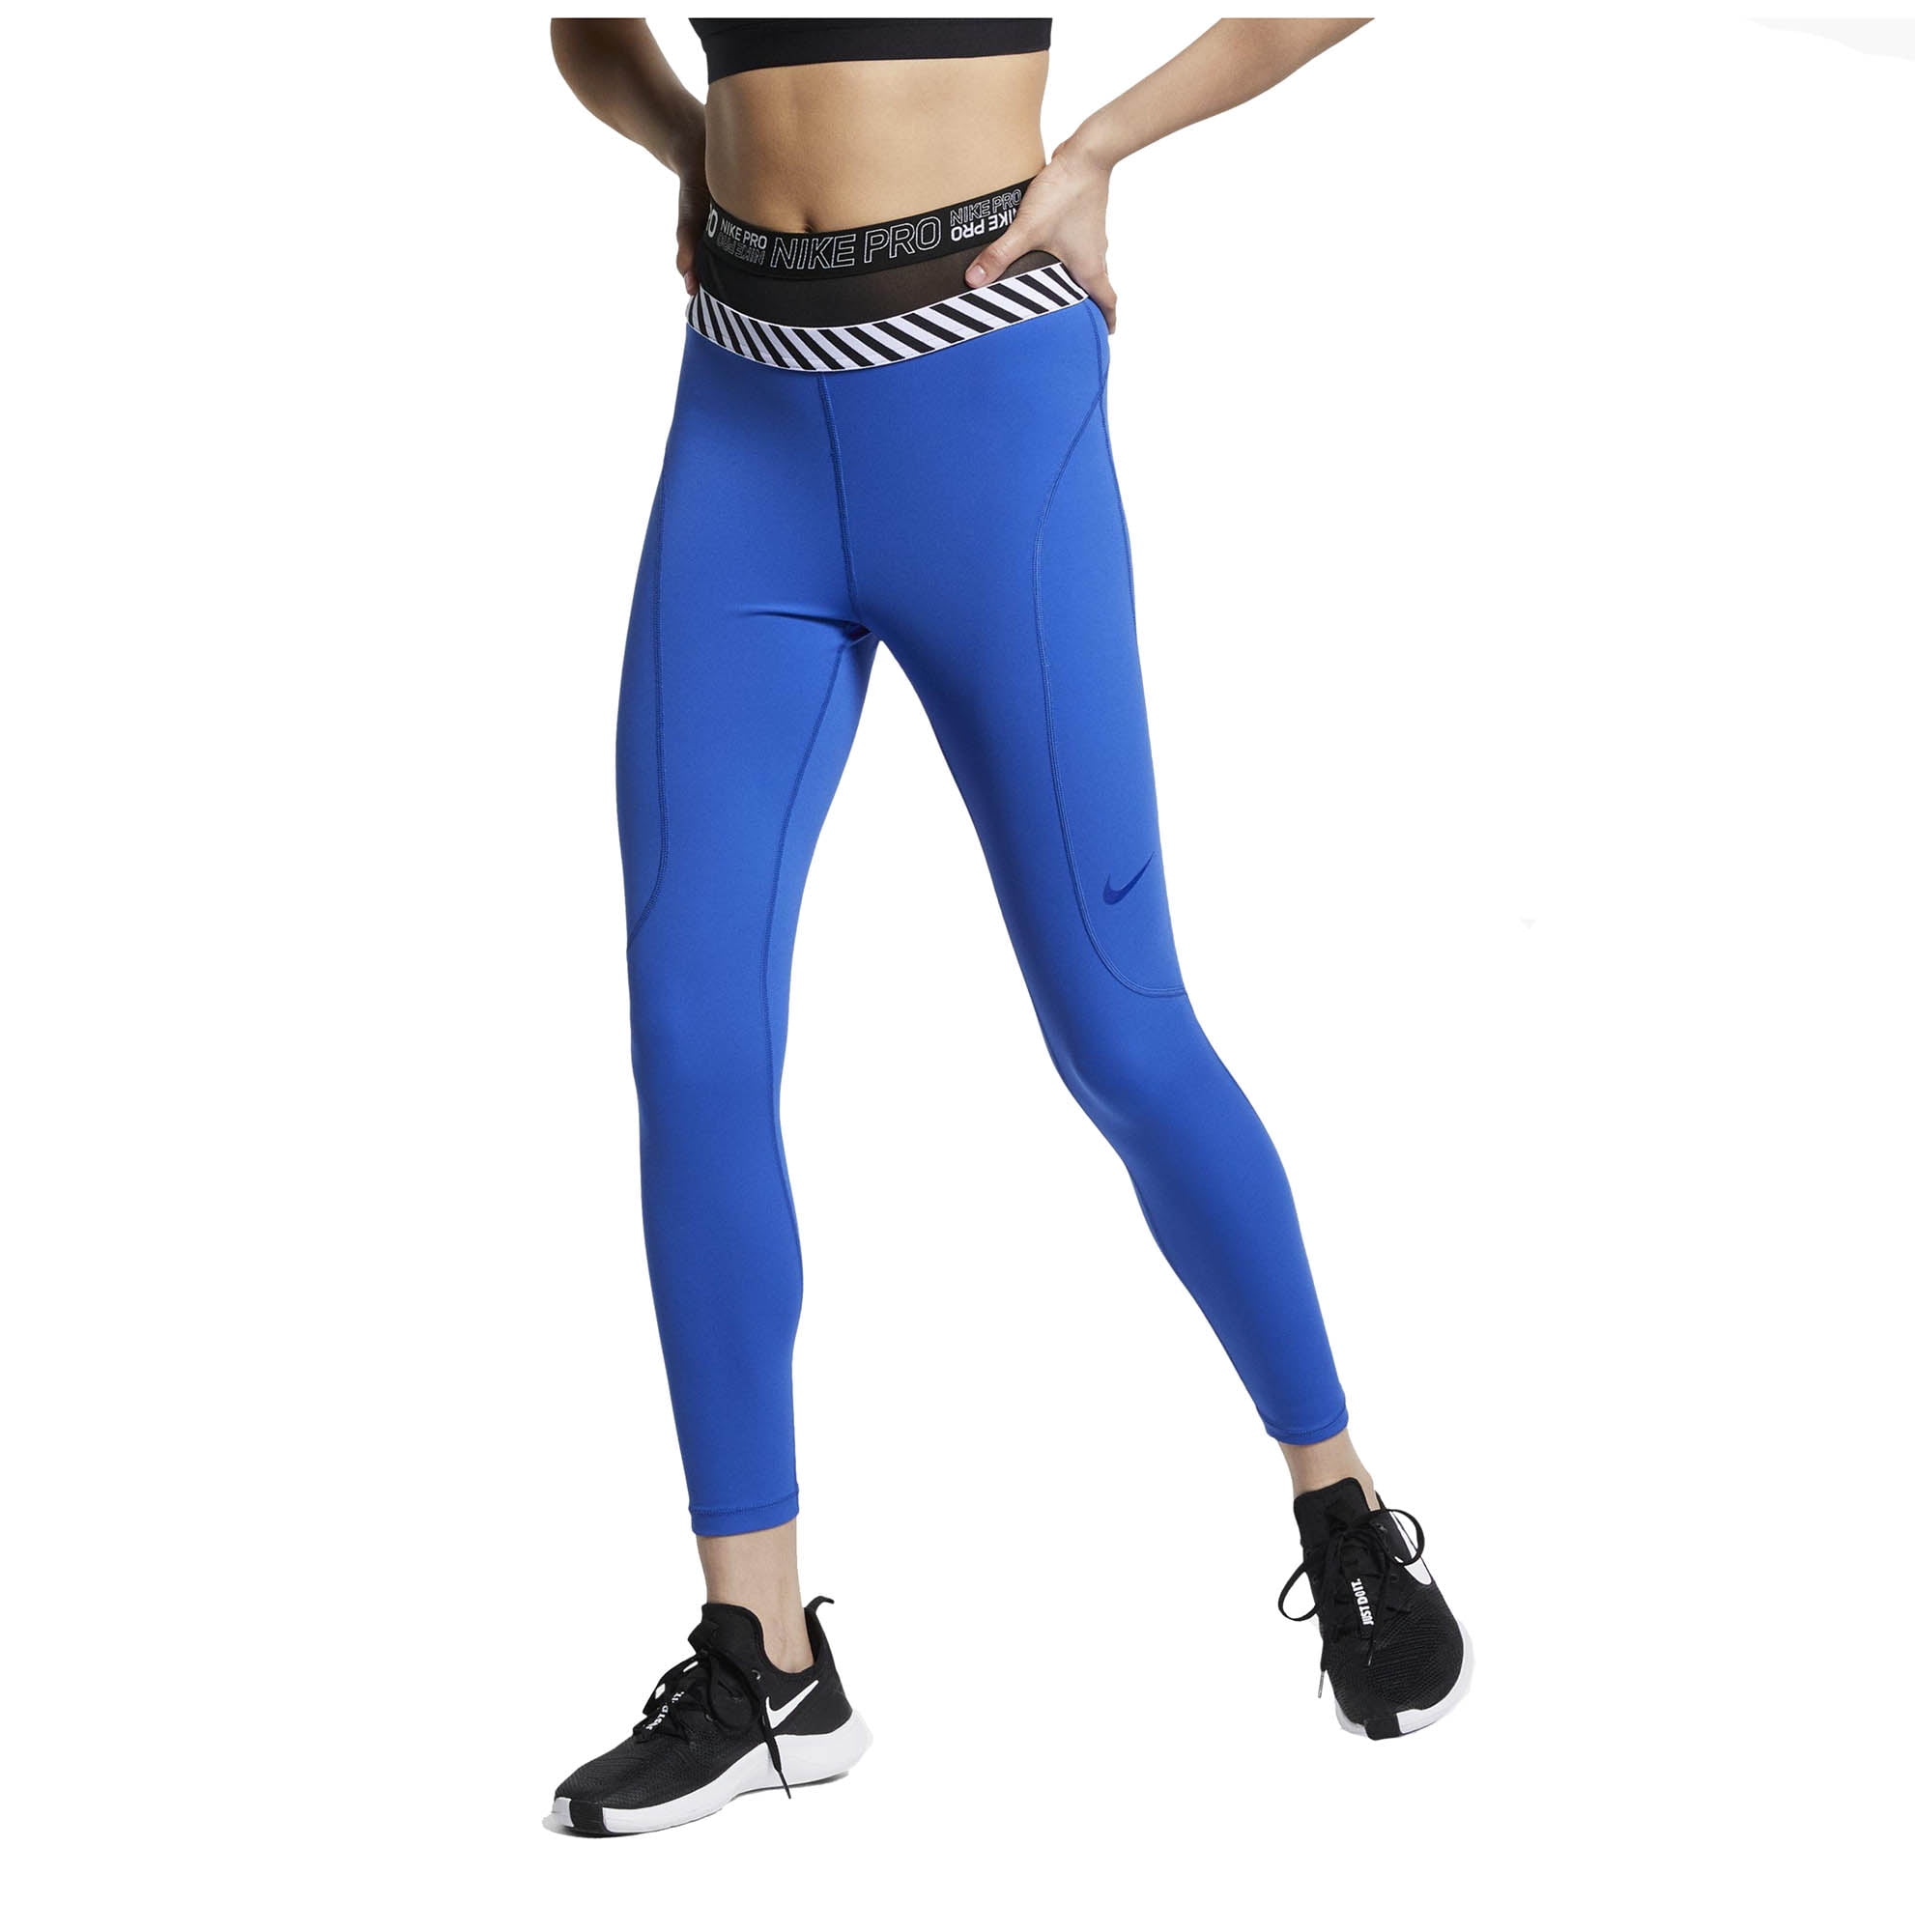 Nike Women's Pro Hypercool 7/8 Training Pants (Game Royal/Black, XX-Large)